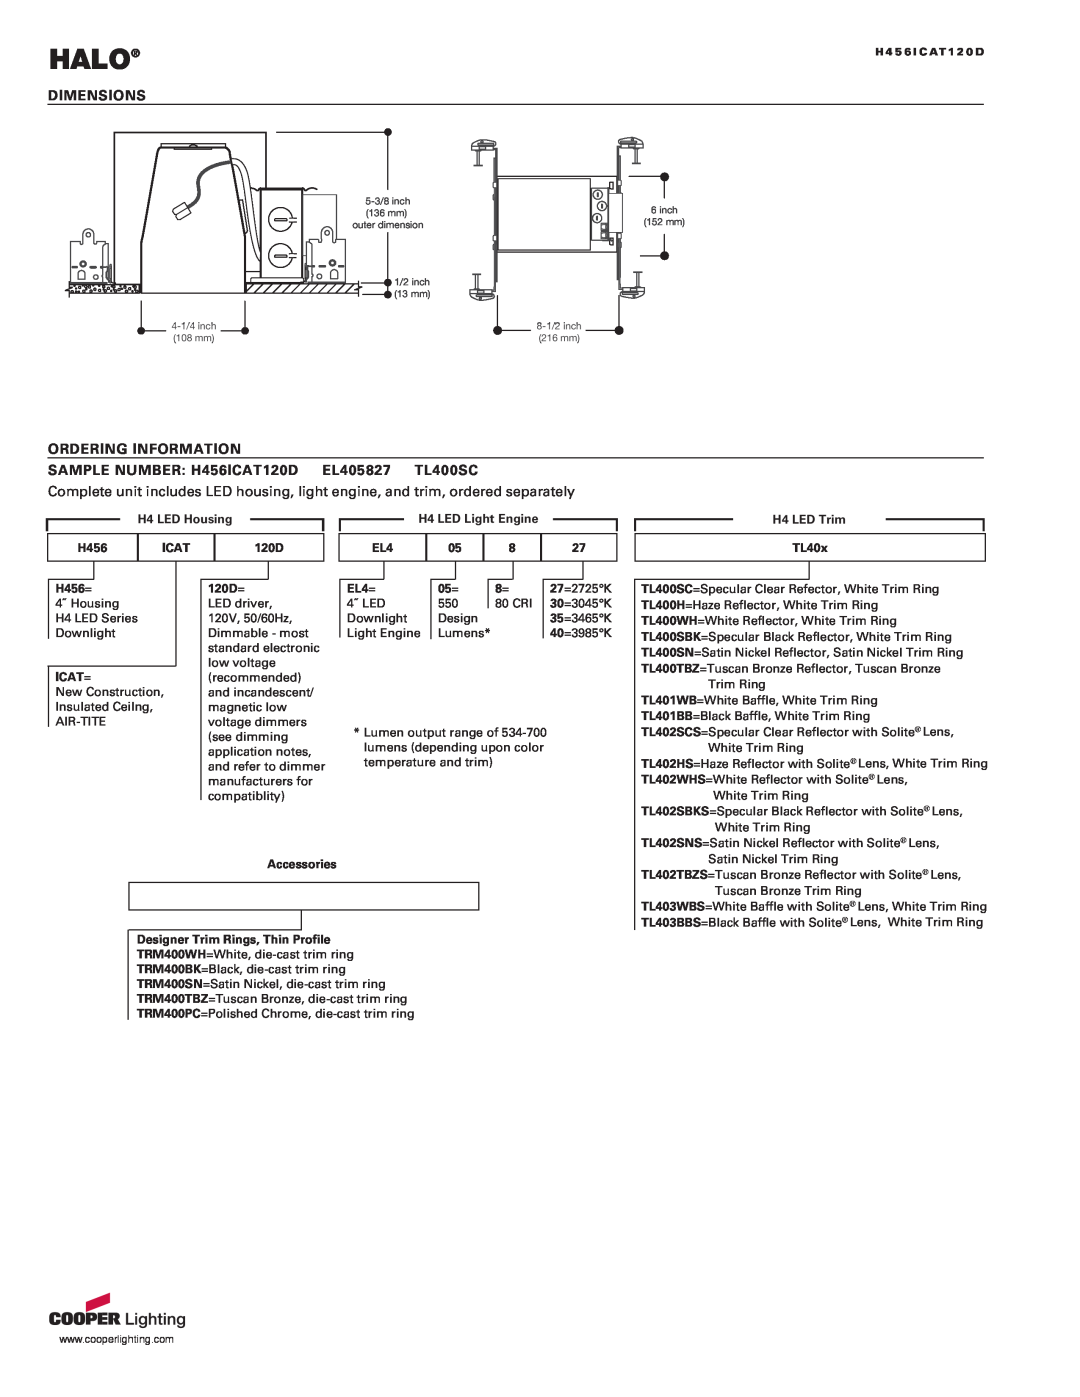 Cooper Lighting specifications Halo, Dimensions, ORDERING INFORMATION SAMPLE NUMBER H456ICAT120D EL405827 TL400SC 